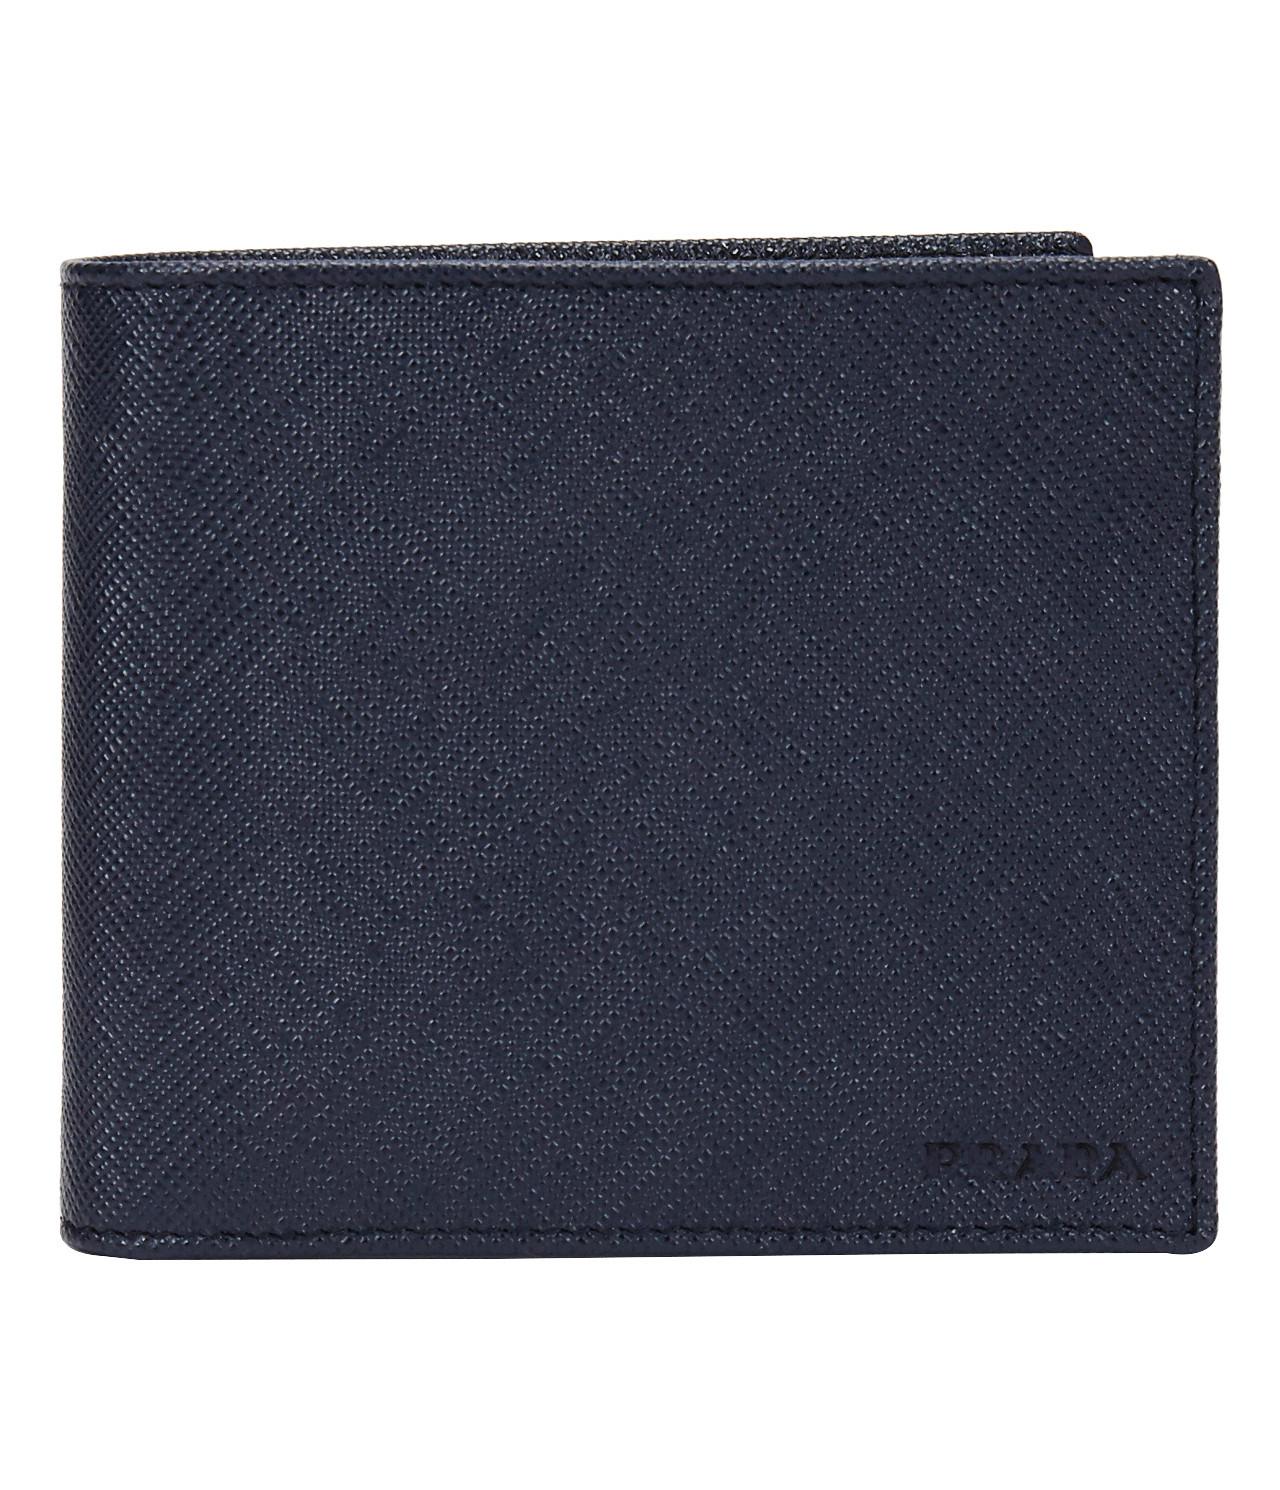 Lyst - Prada 17ss Men's Wallet Saffiano Baltico in Blue for Men